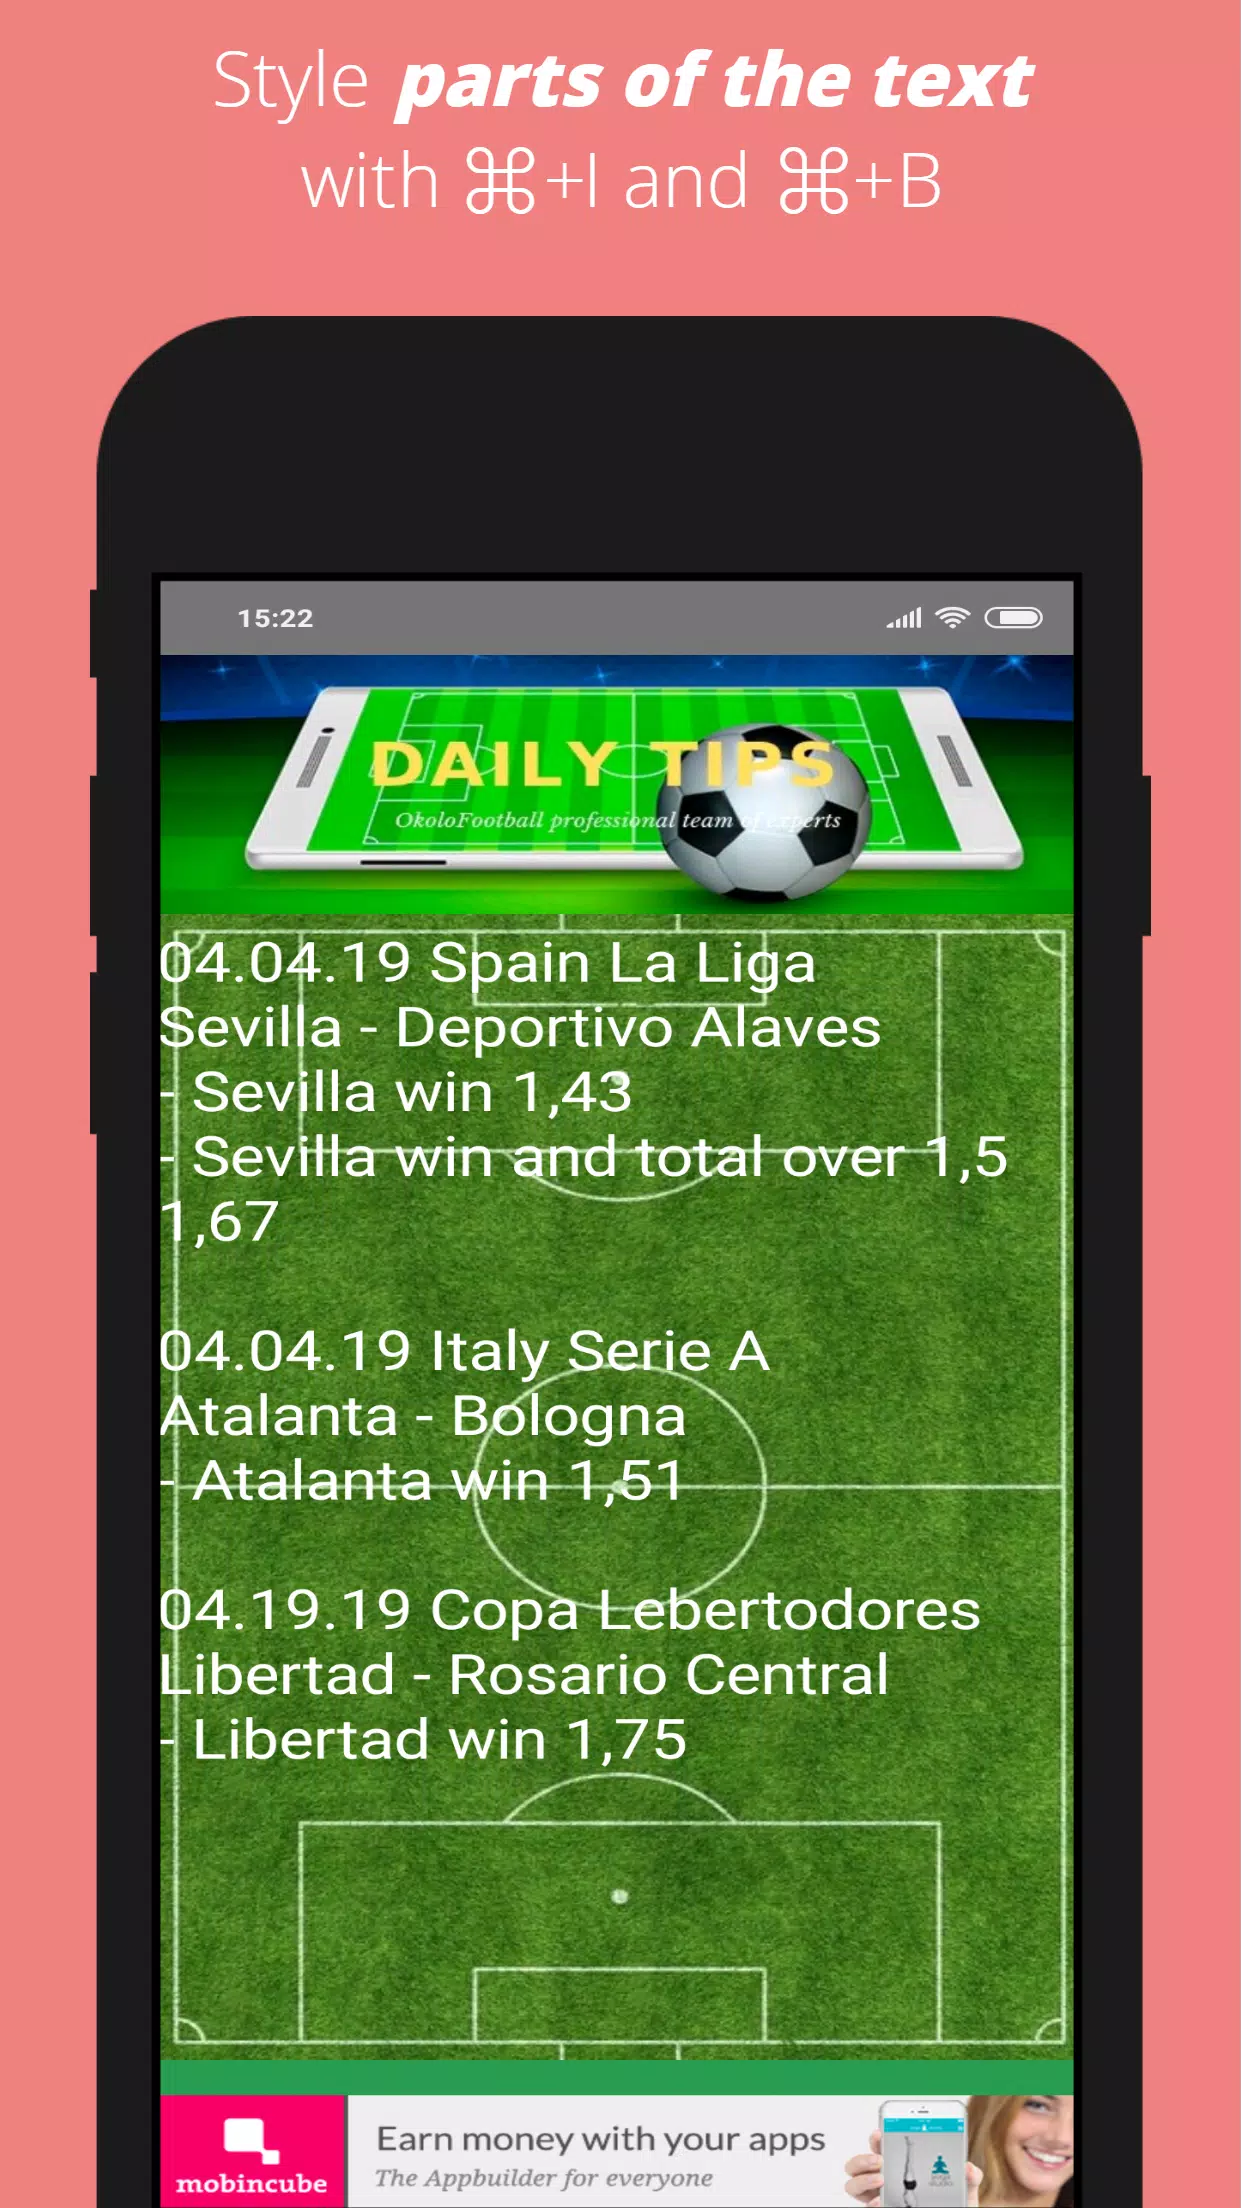 Italy Serie B Tips - Winning Betting Predictions